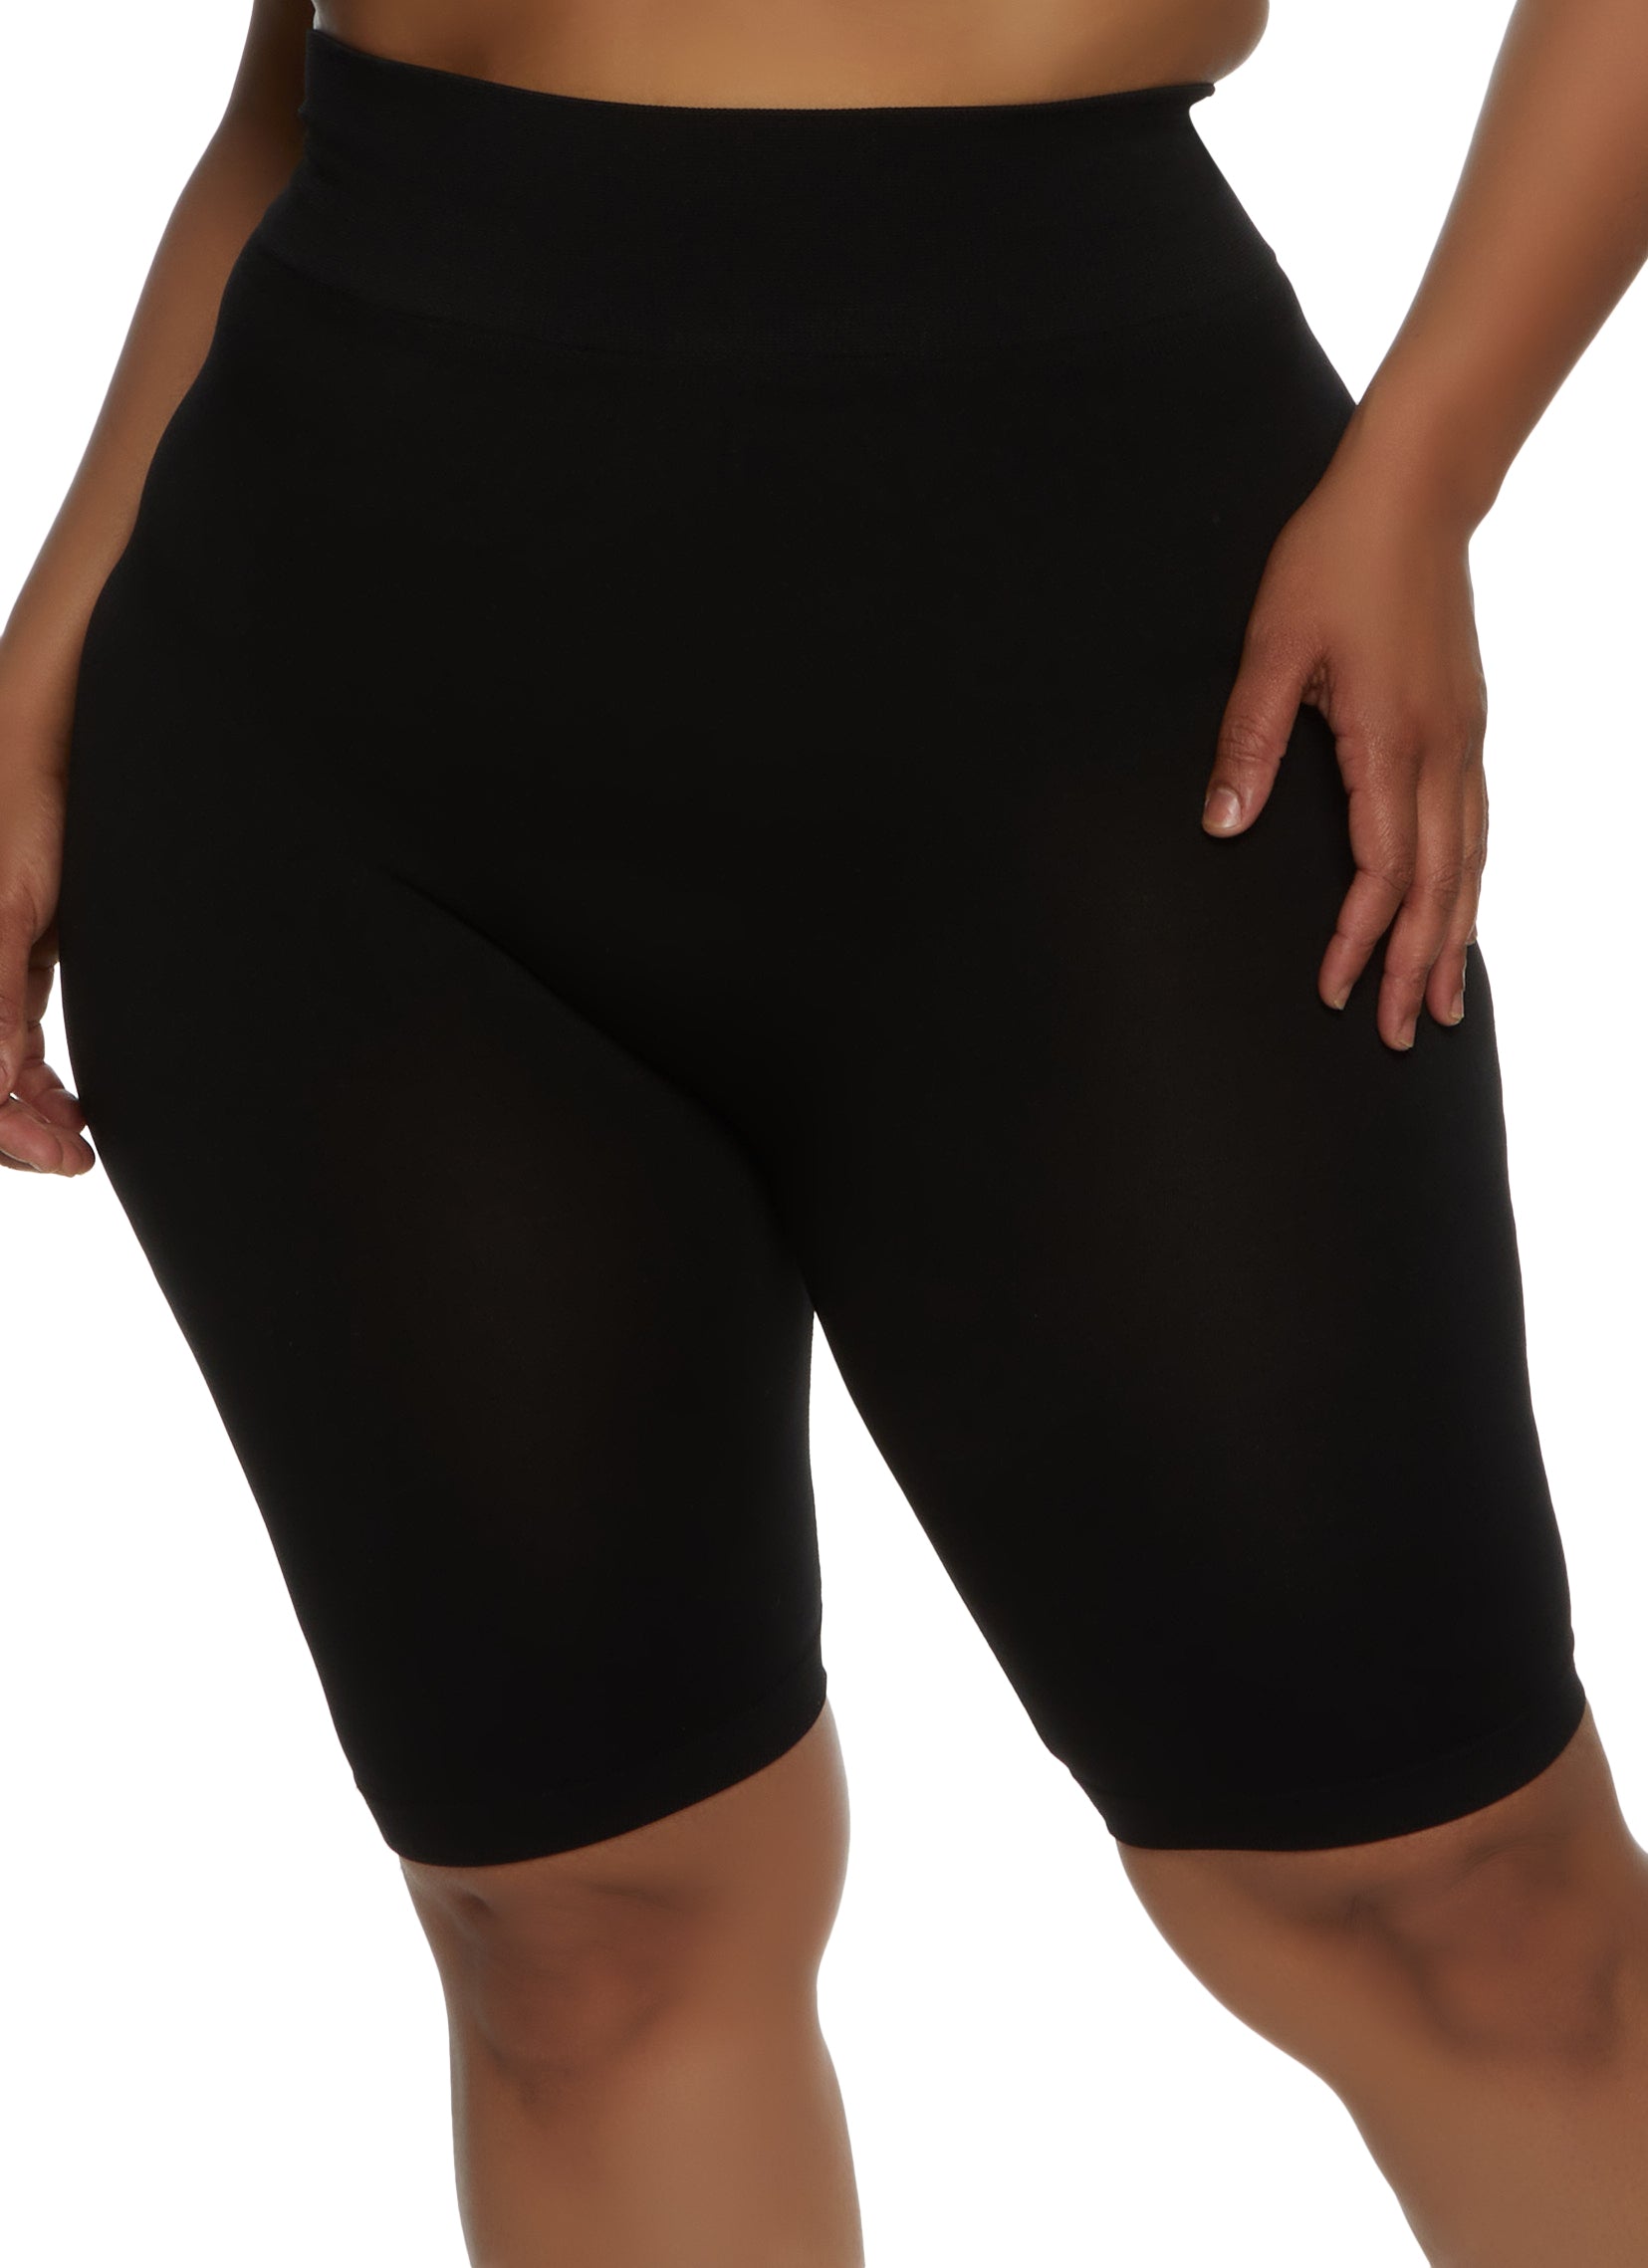 Casual Solid Biker Shorts Black Plus Size Leggings (Women's)